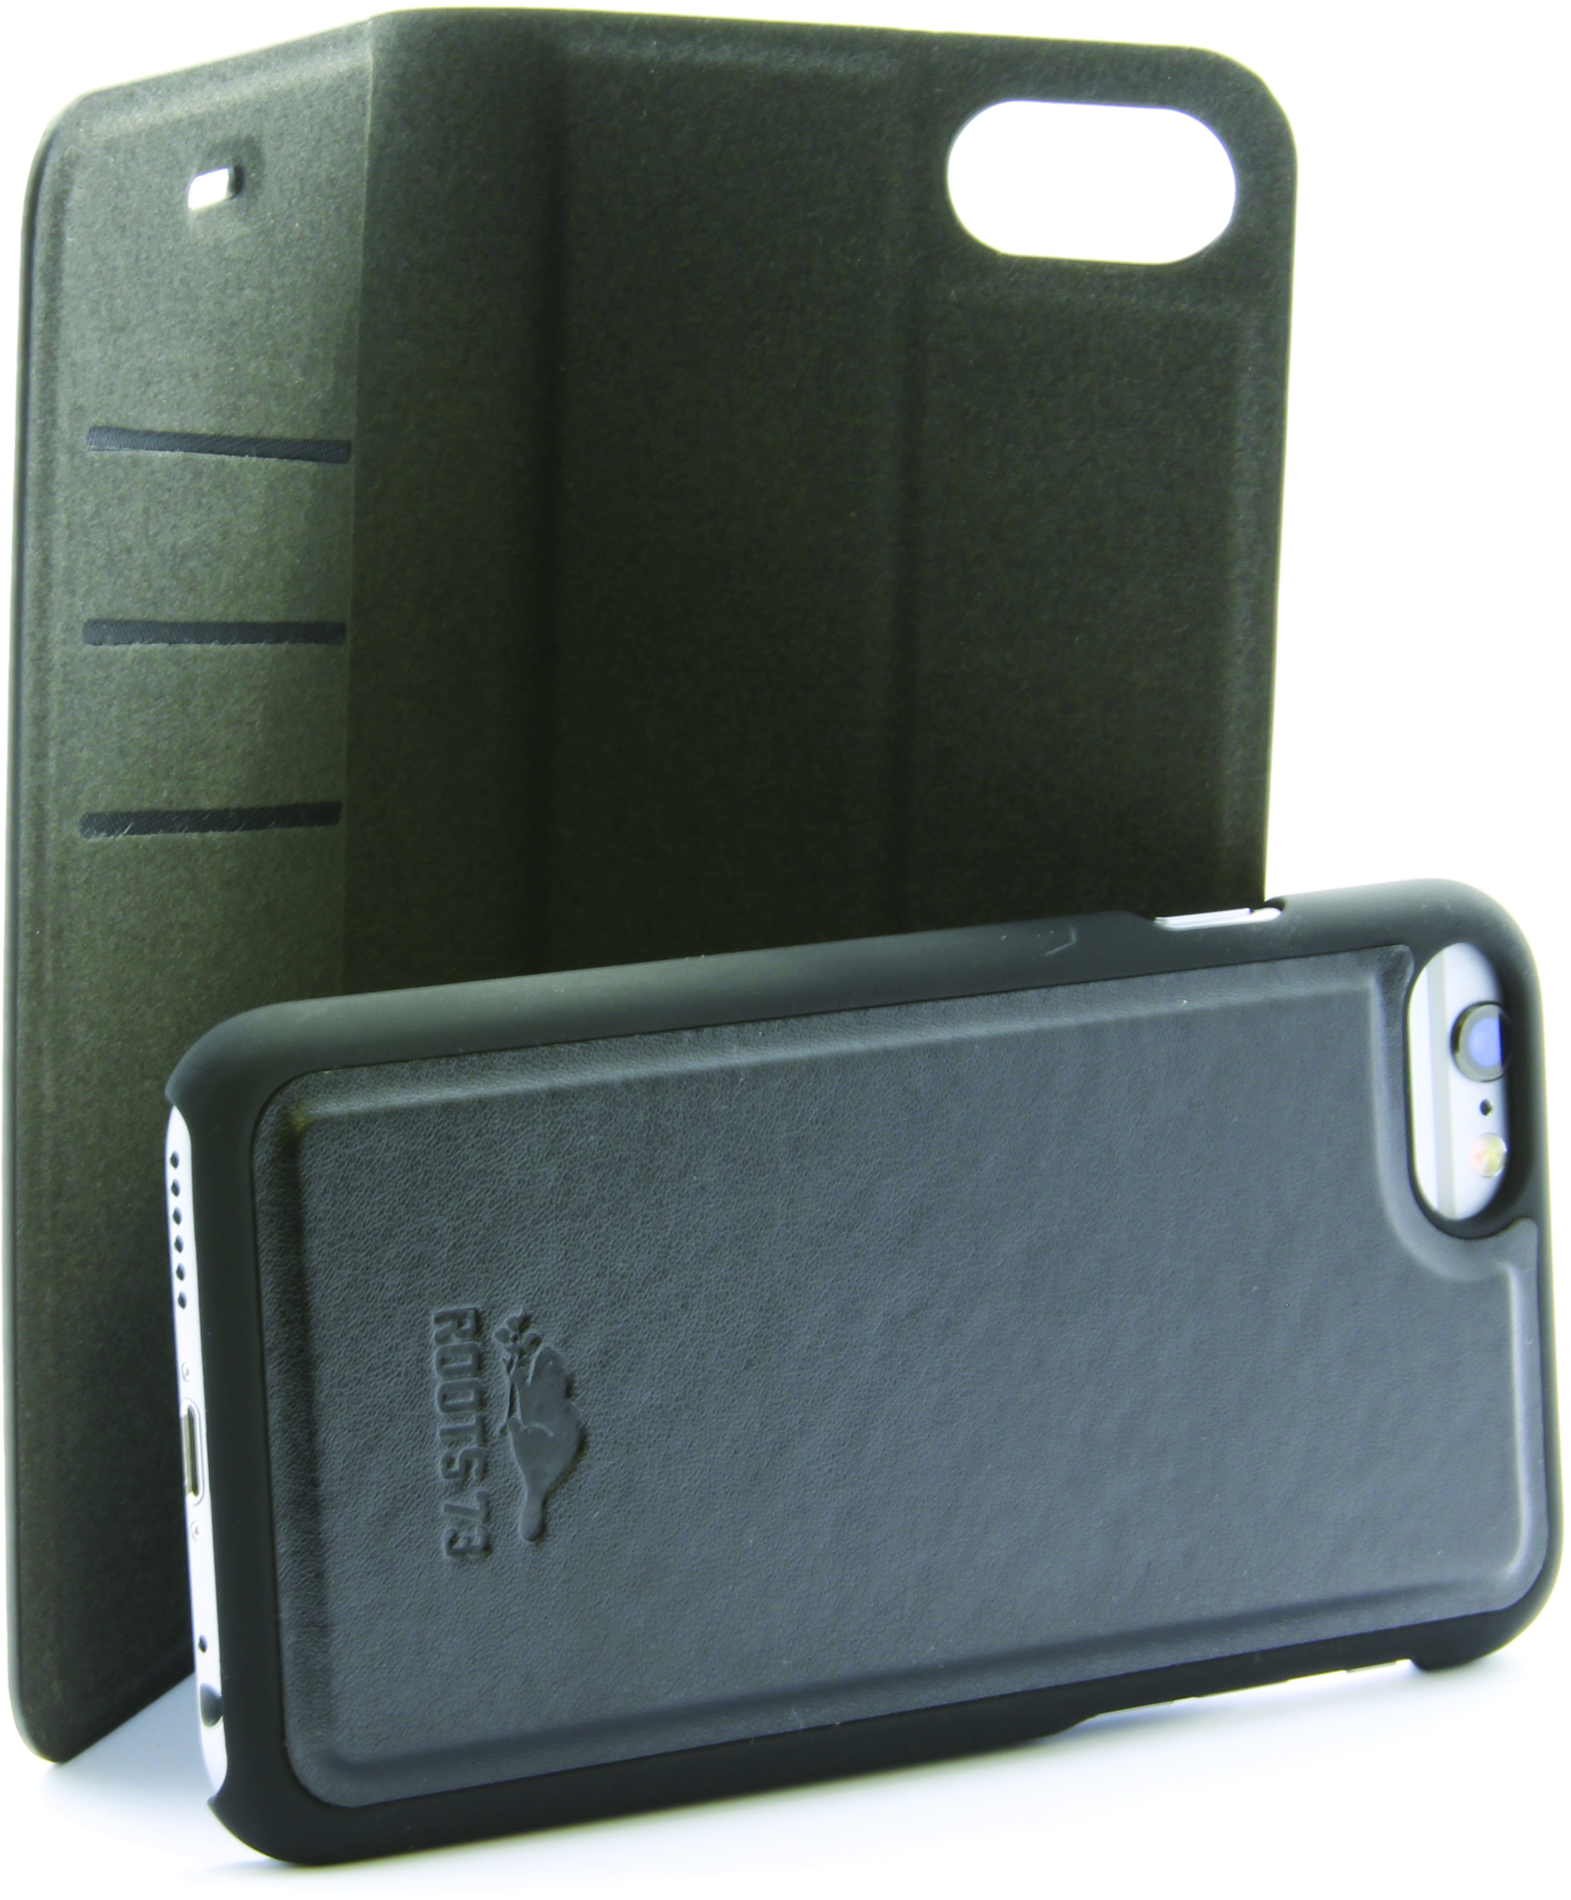 Galaxy S8 3-in-1 Folio Case - Black